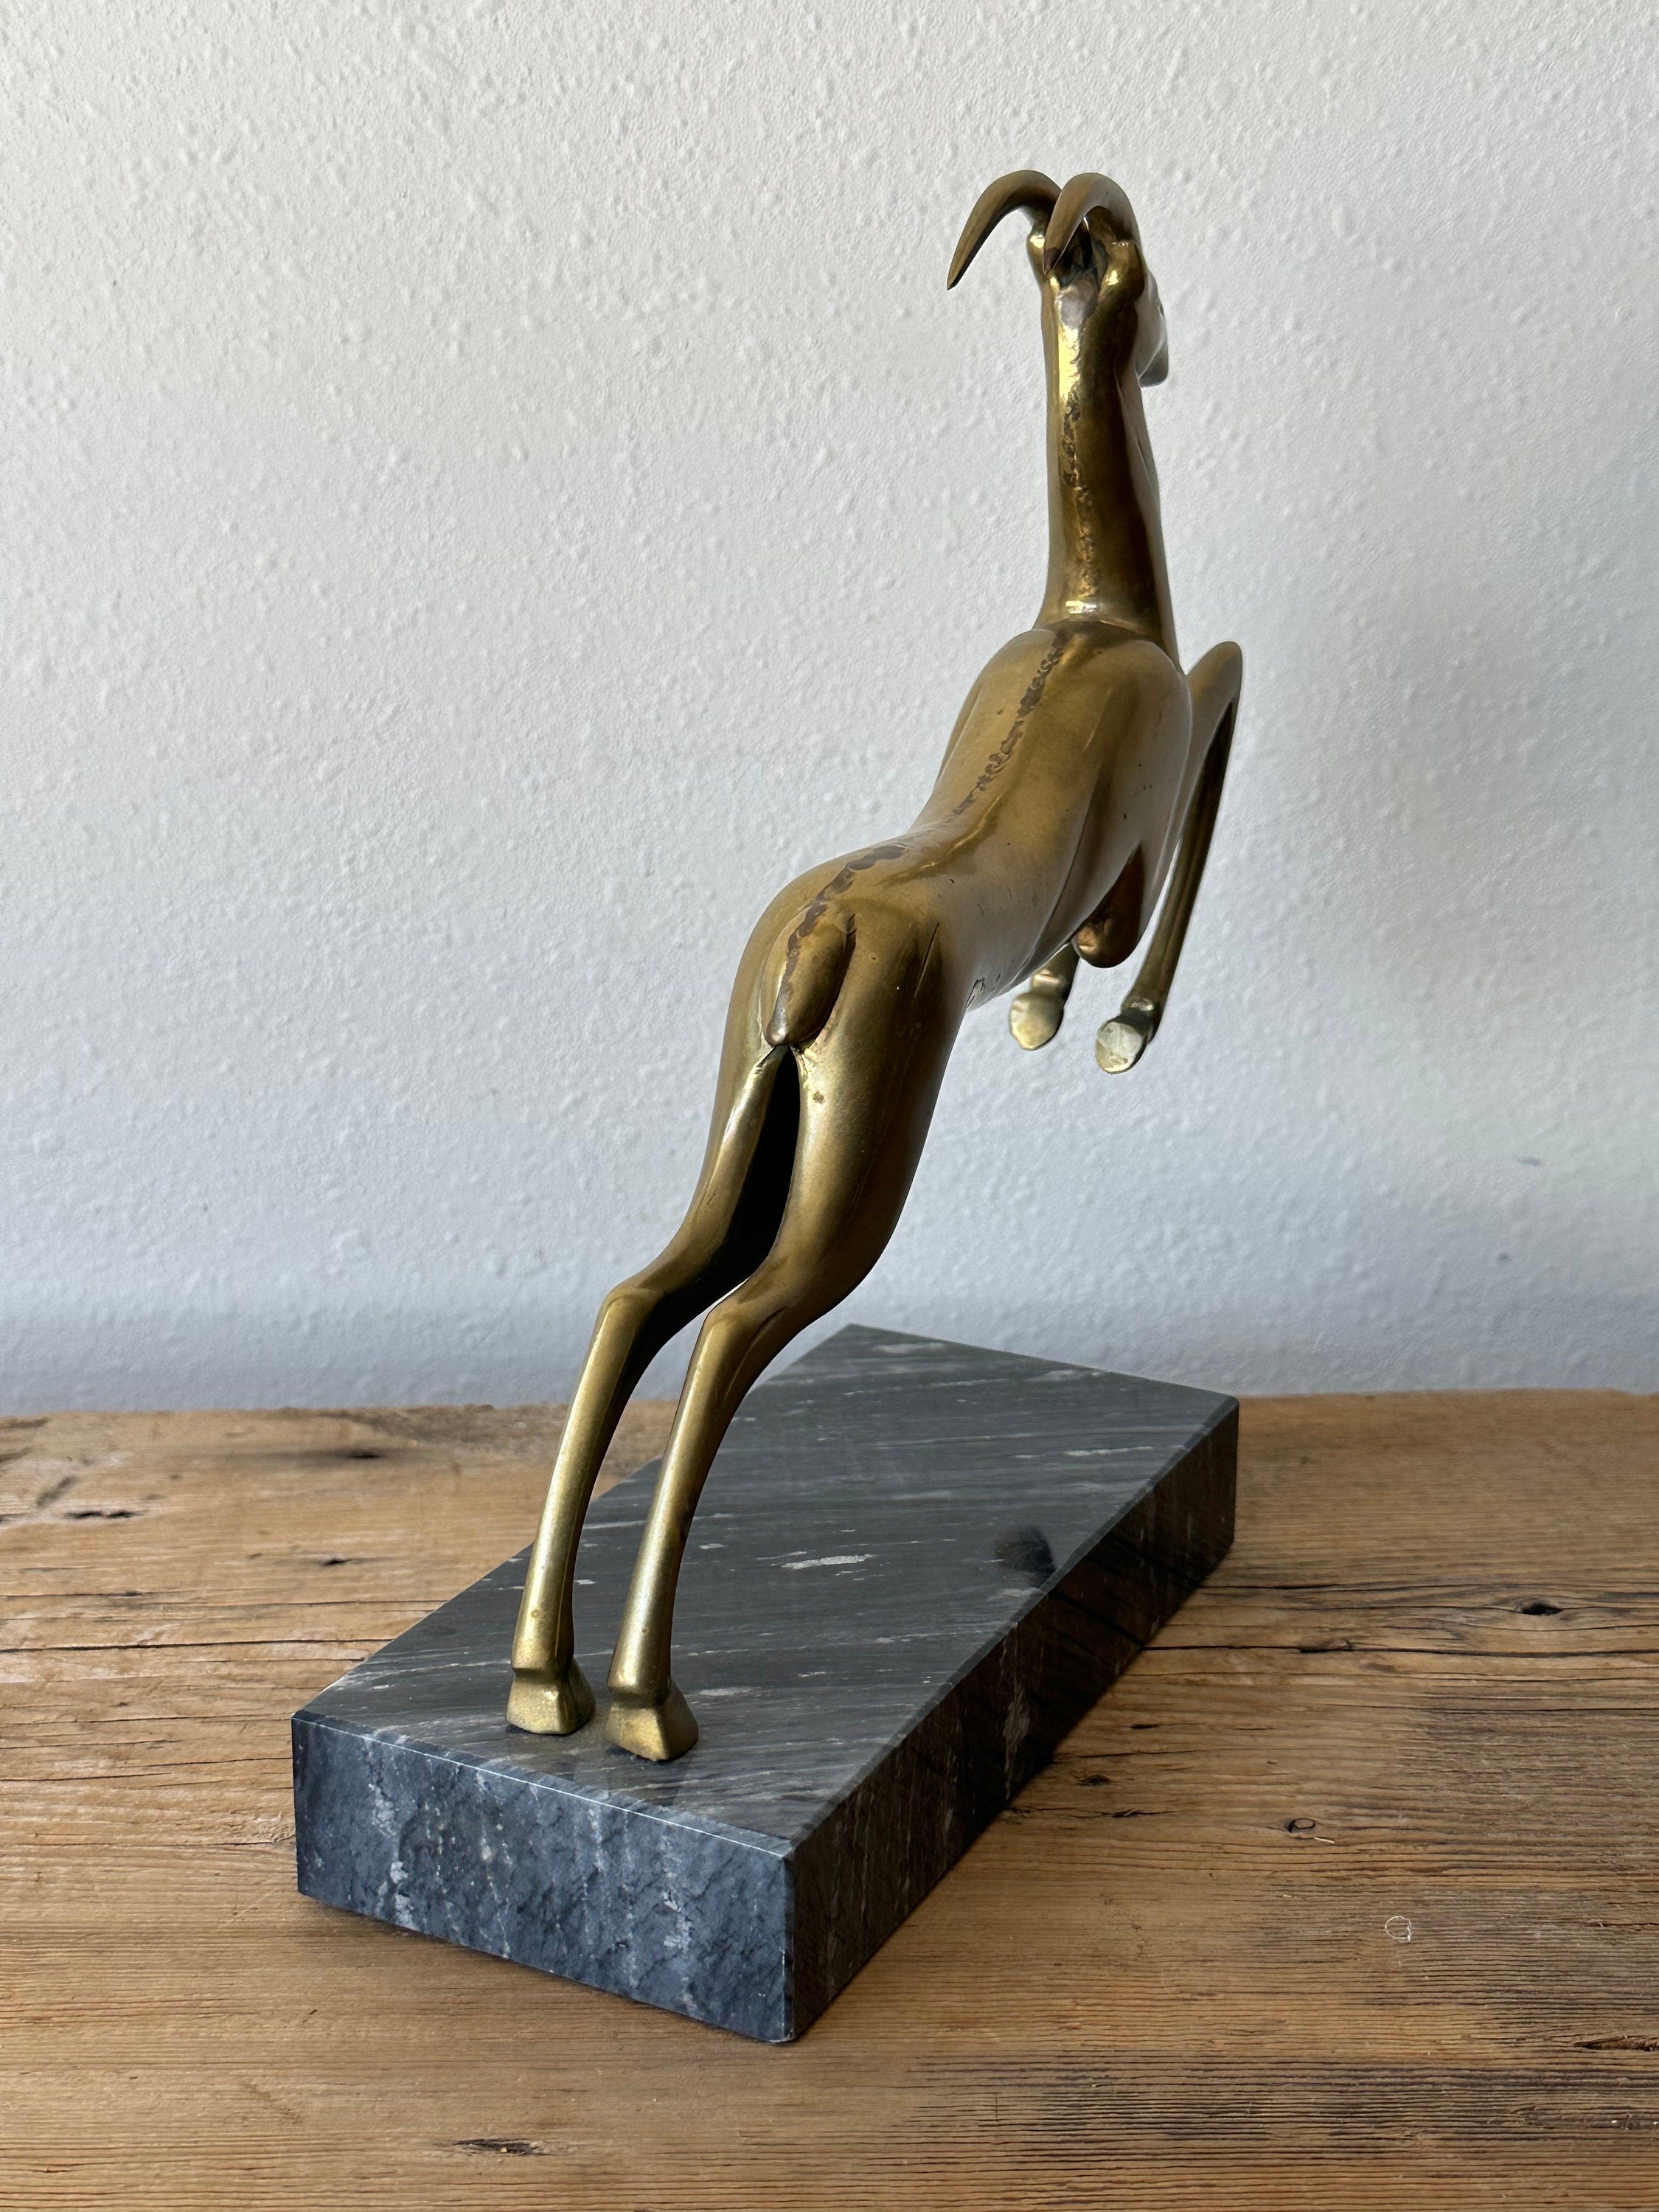 Vintage 1983 Brass Leaping Gazelle Sculpture Figurine on Marble Base by Dara International | Antelope Sculpture Office Bookshelf Decor